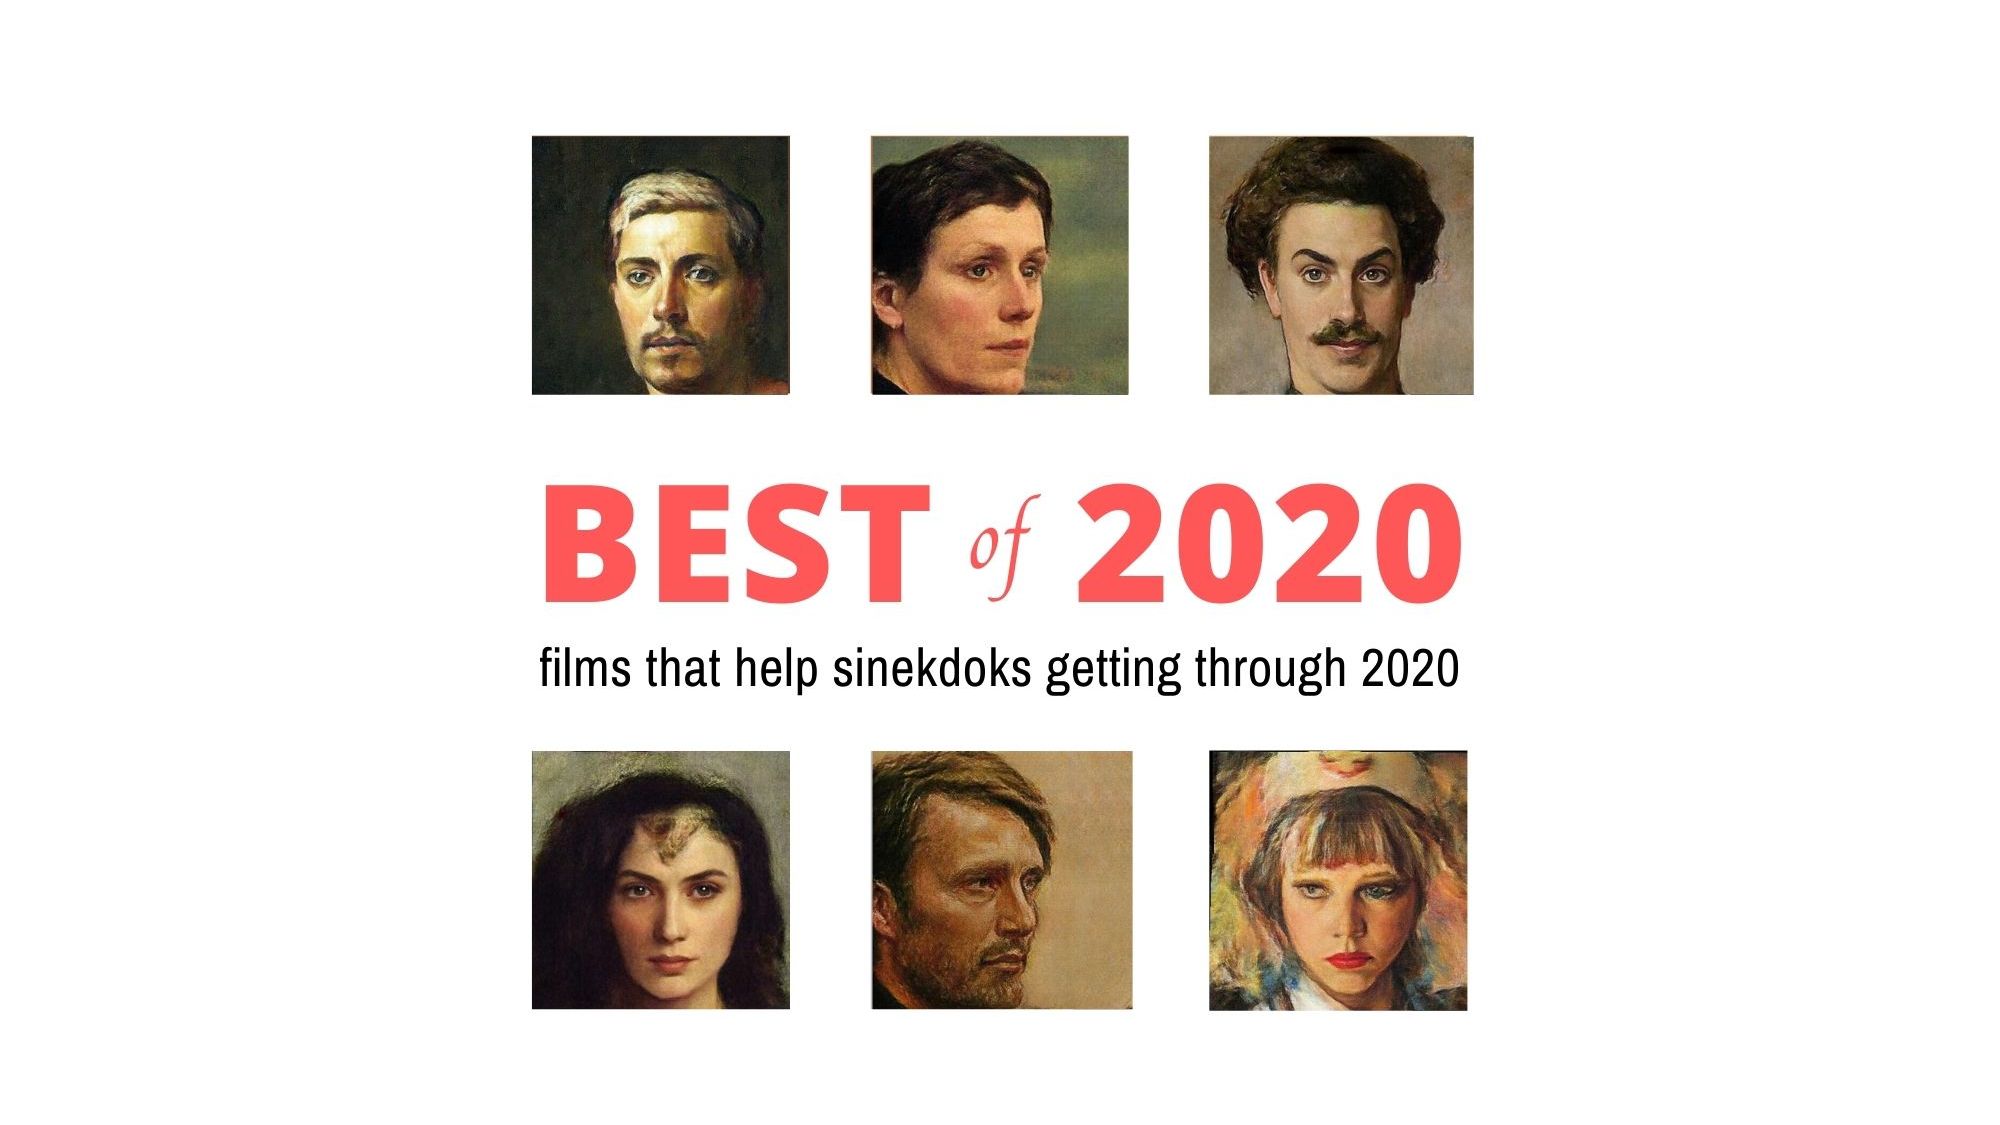 Best of 2020: Films that Help Sinekdoks Getting Through the Strange Year